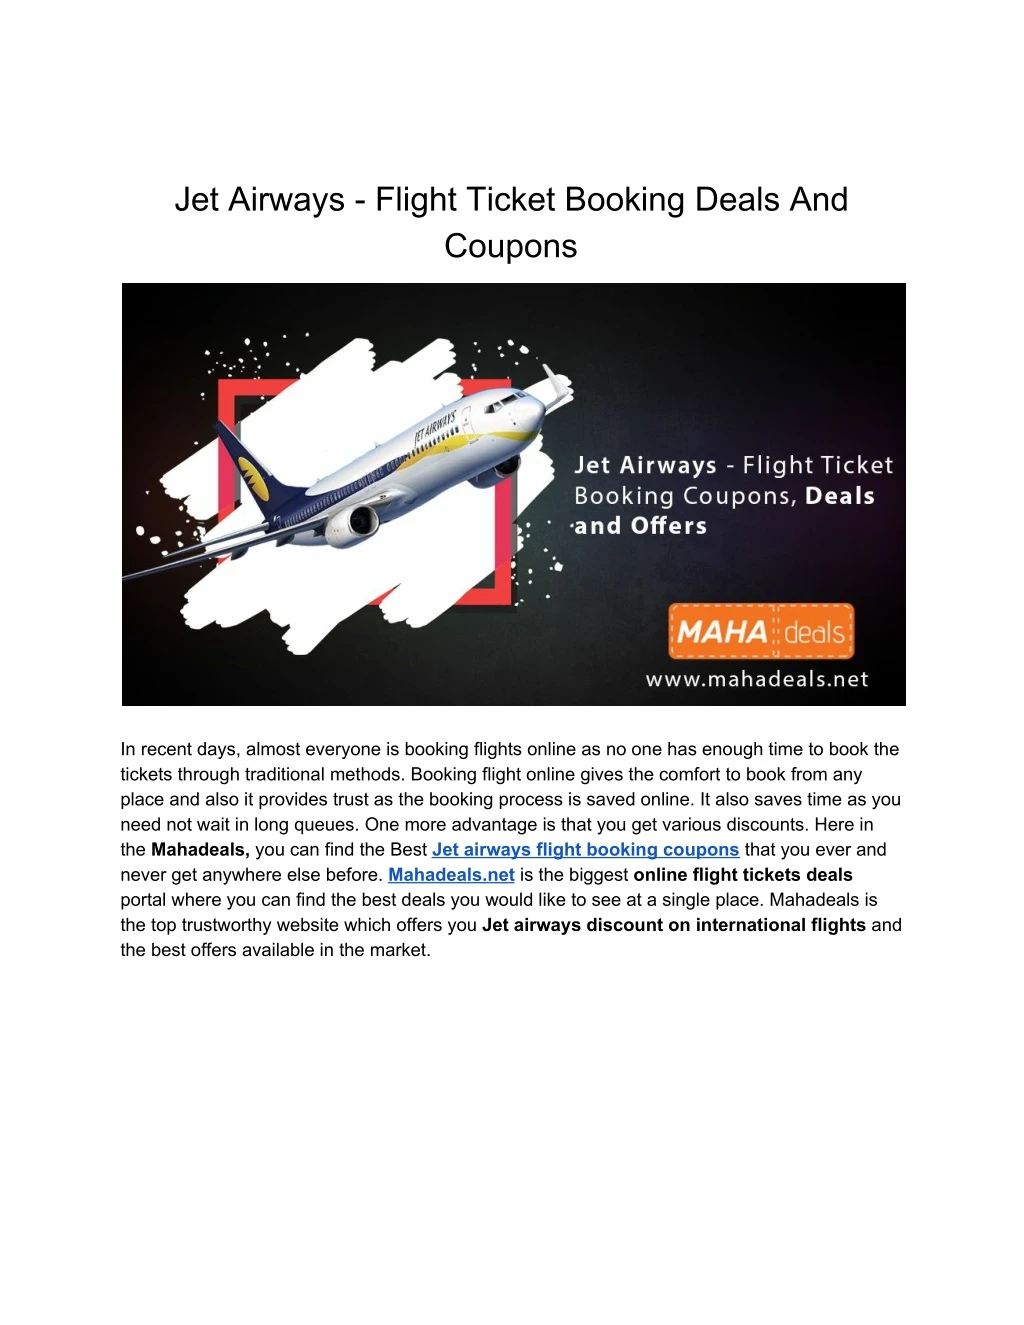 jet airways flight ticket booking deals